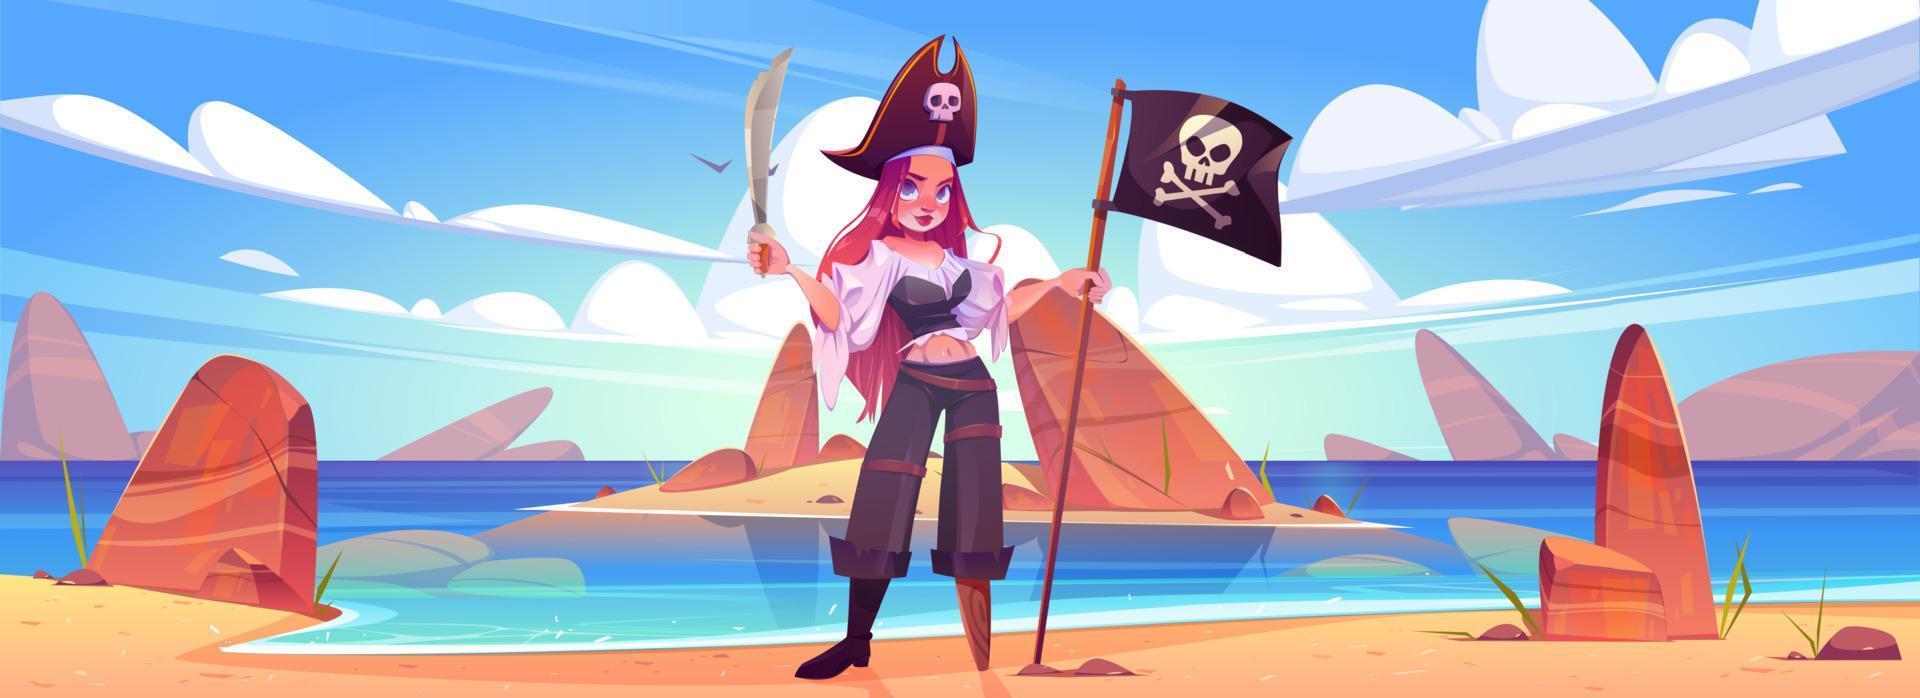 Piratin am Strand mit Jolly Roger-Flagge, Schwert vektor